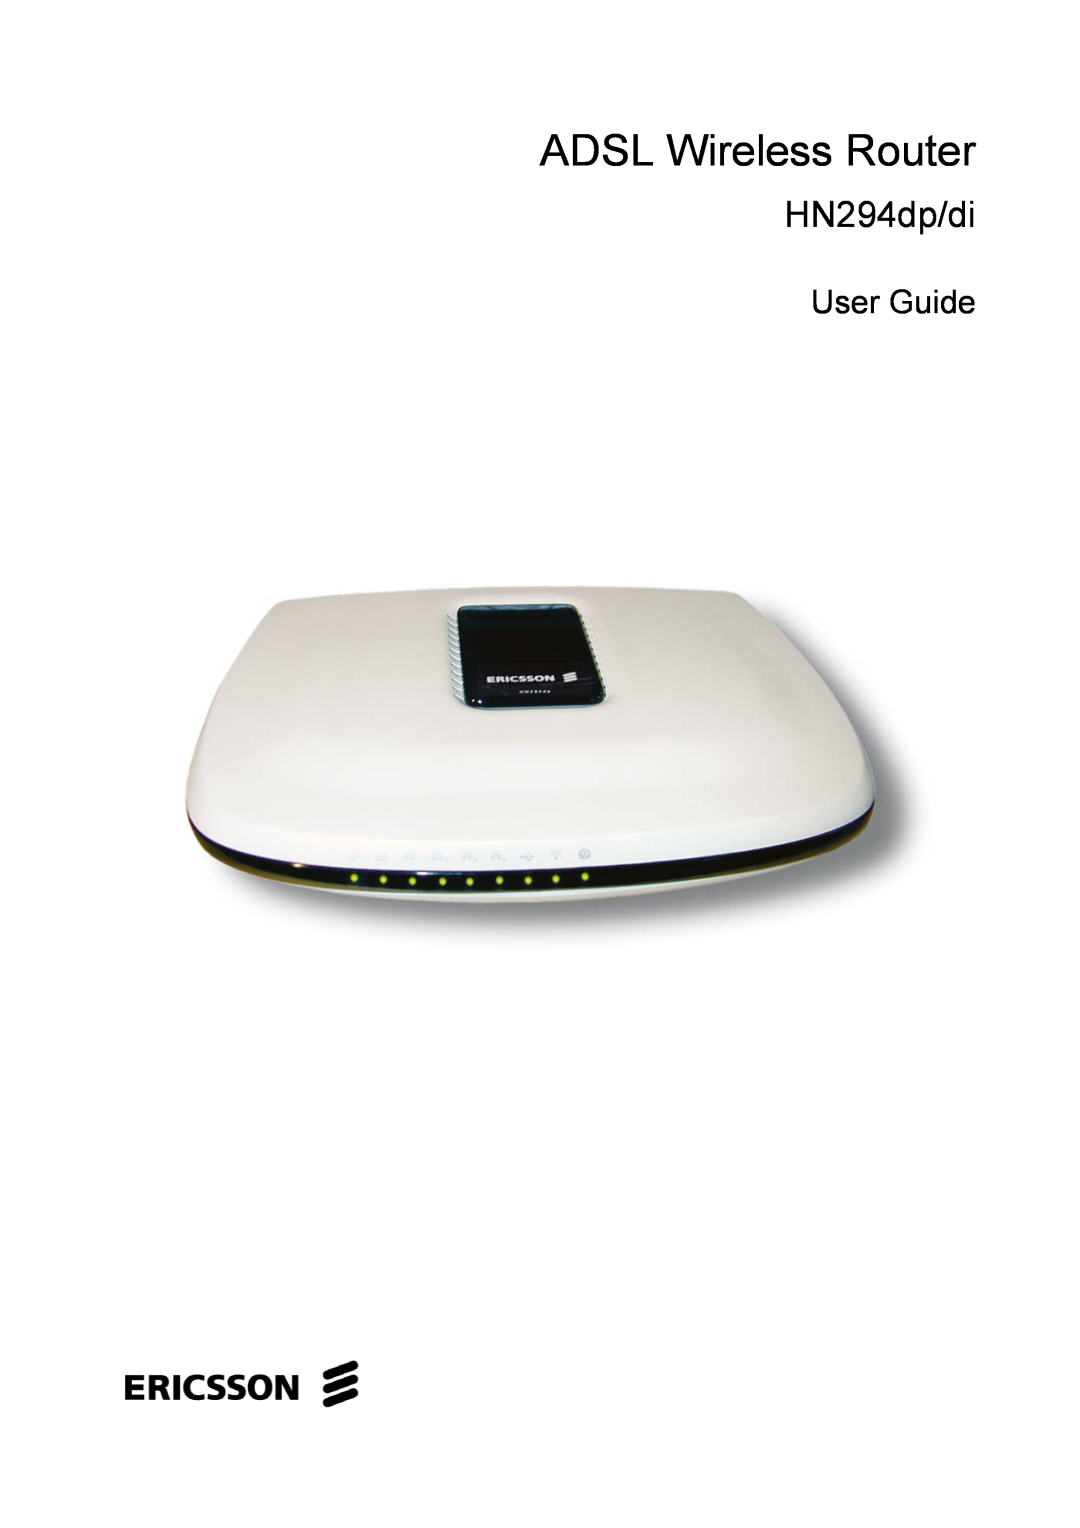 Garmin HN294DP/DI manual ADSL Wireless Router, HN294dp/di, User Guide 